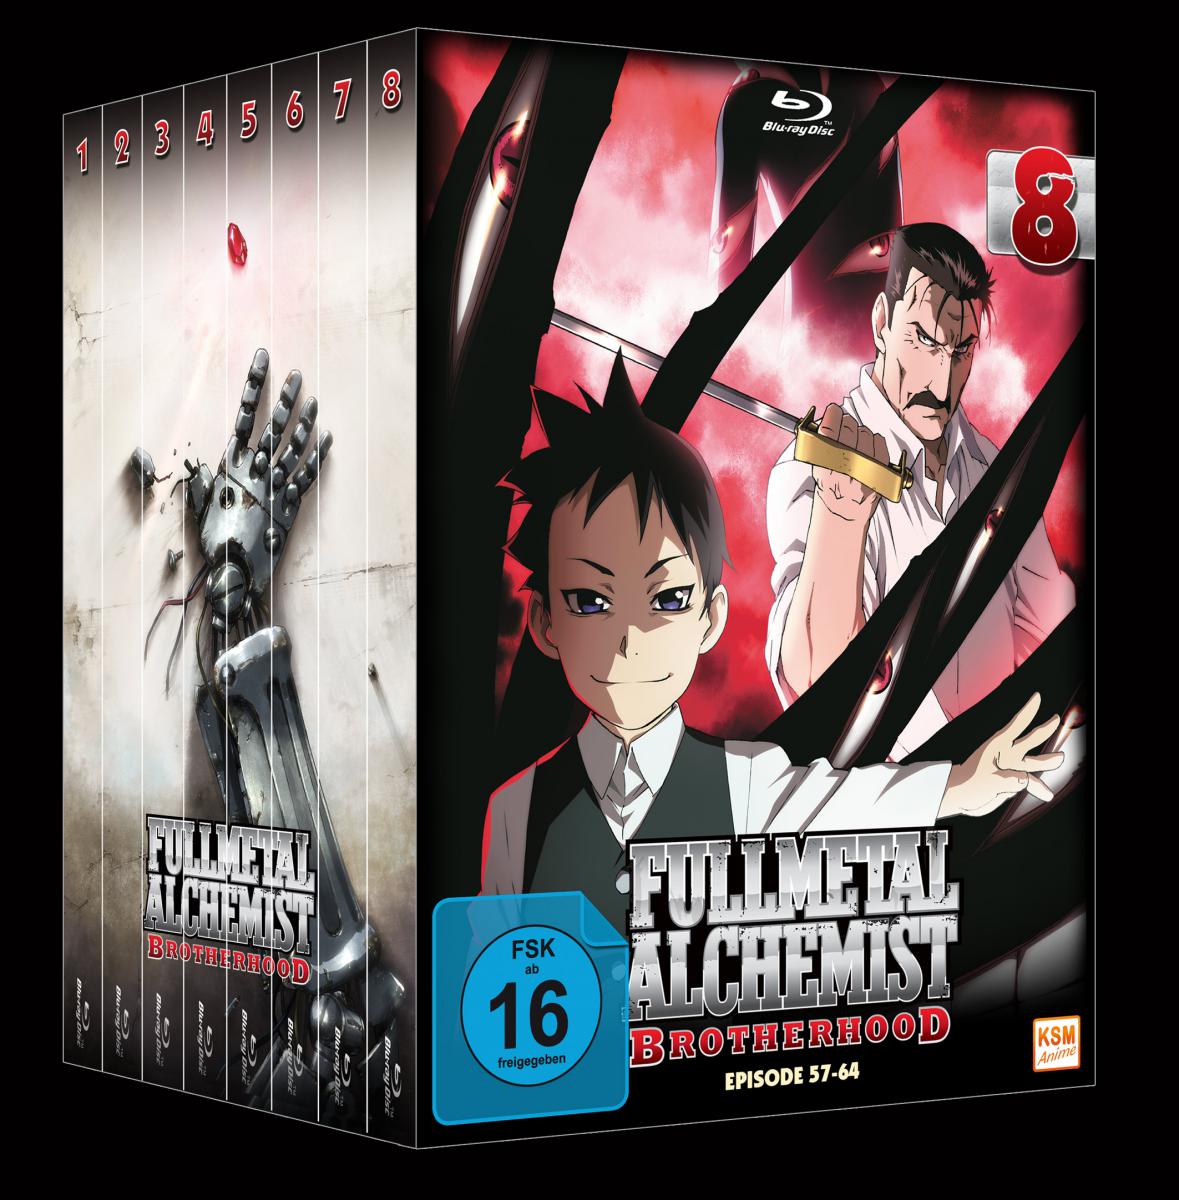 Fullmetal Alchemist: Brotherhood - Volume 1: Episode 01-08 (Limited Edition) Blu-ray Image 6